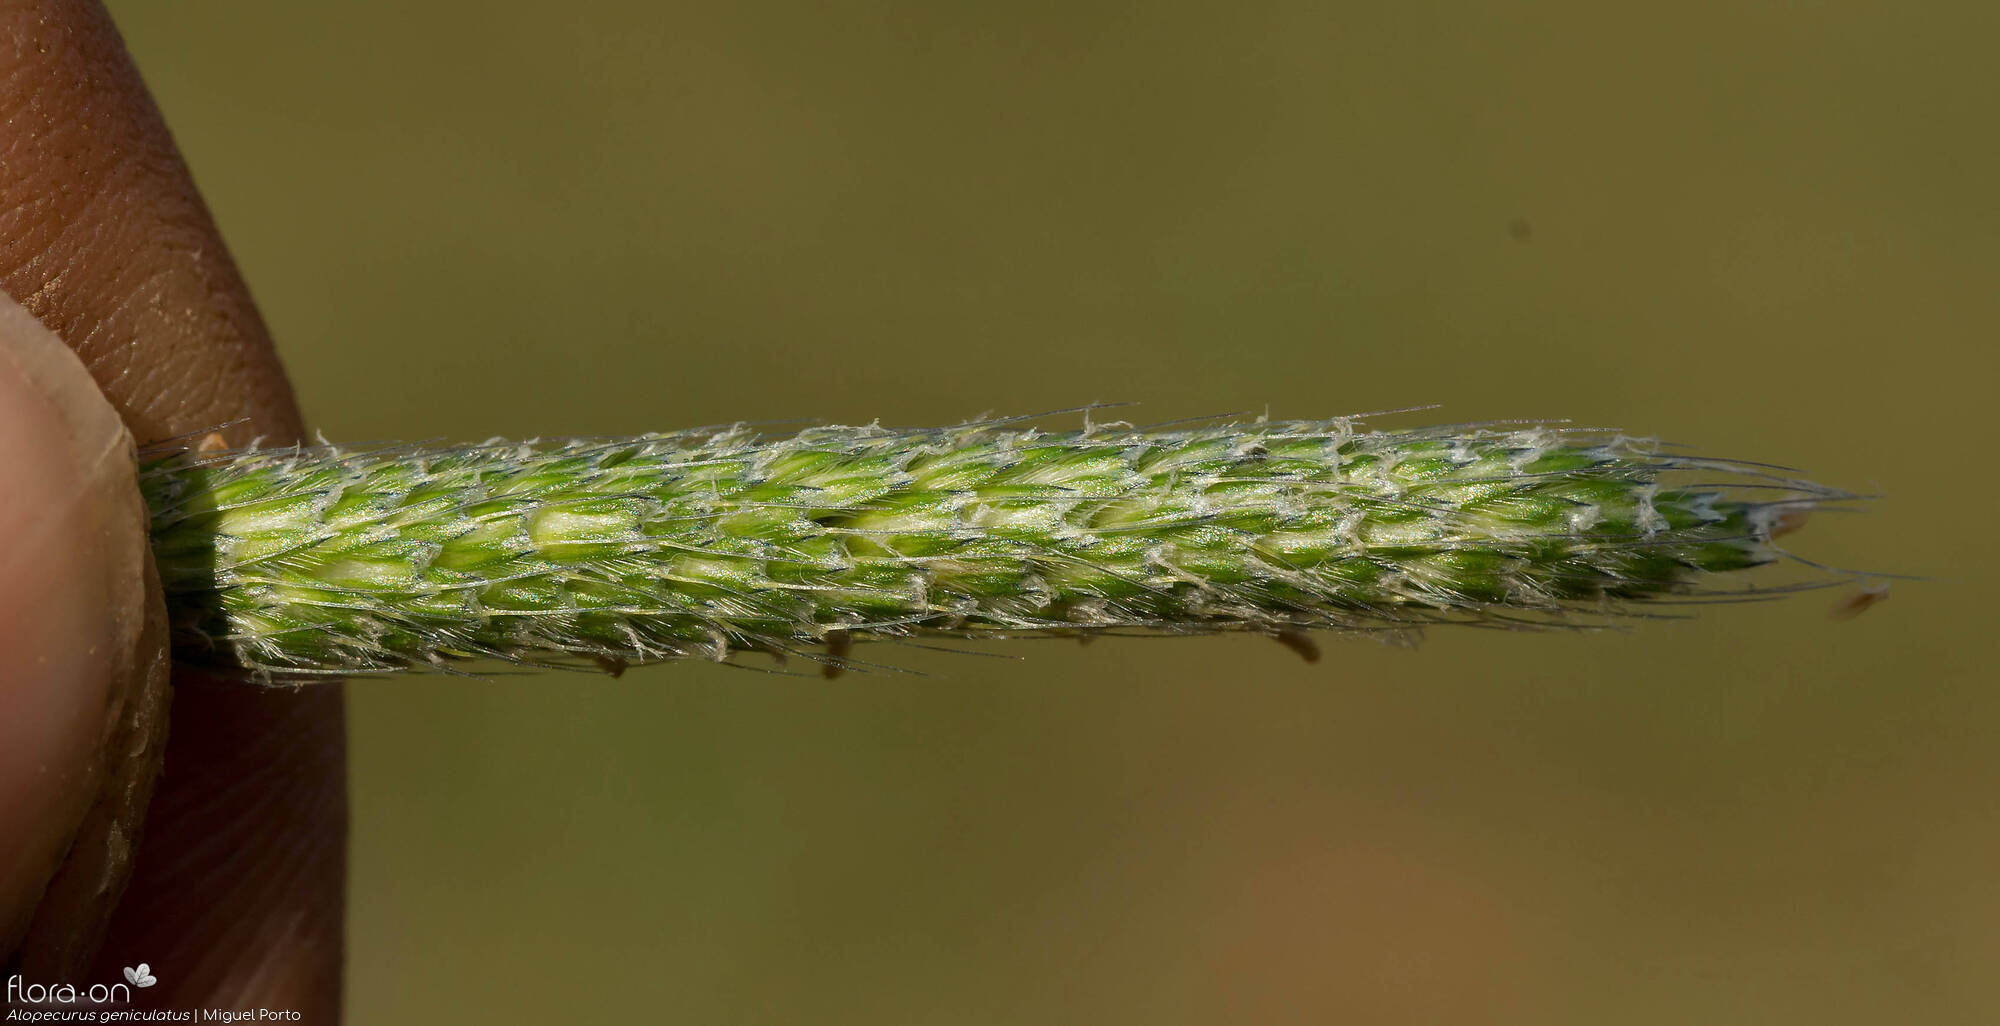 Alopecurus geniculatus - Flor (close-up) | Miguel Porto; CC BY-NC 4.0